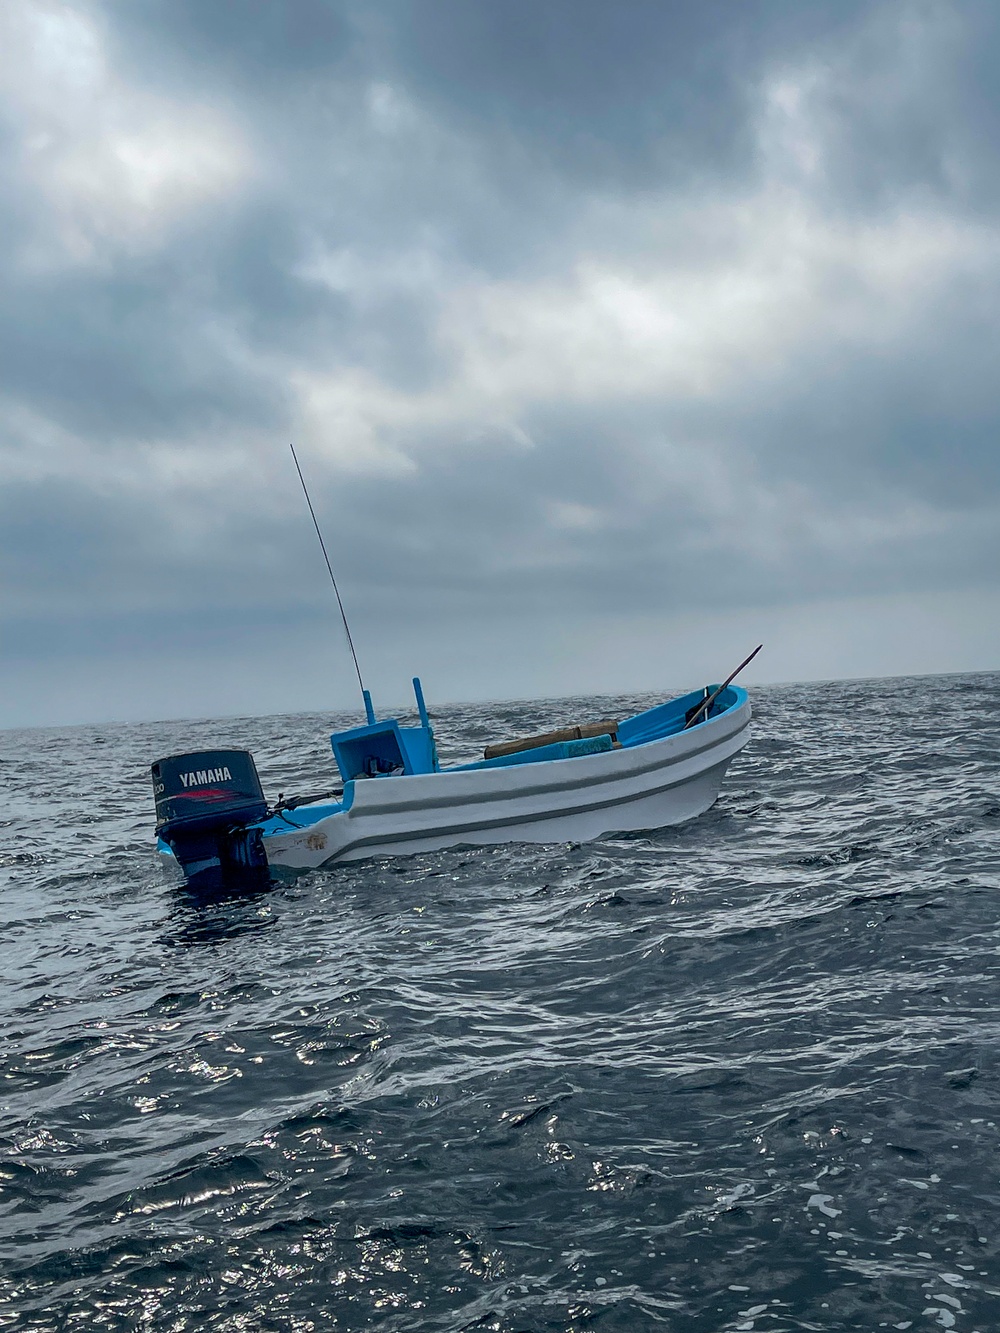 Coast Guard interdicts lancha crew illegally fishing off Texas coast